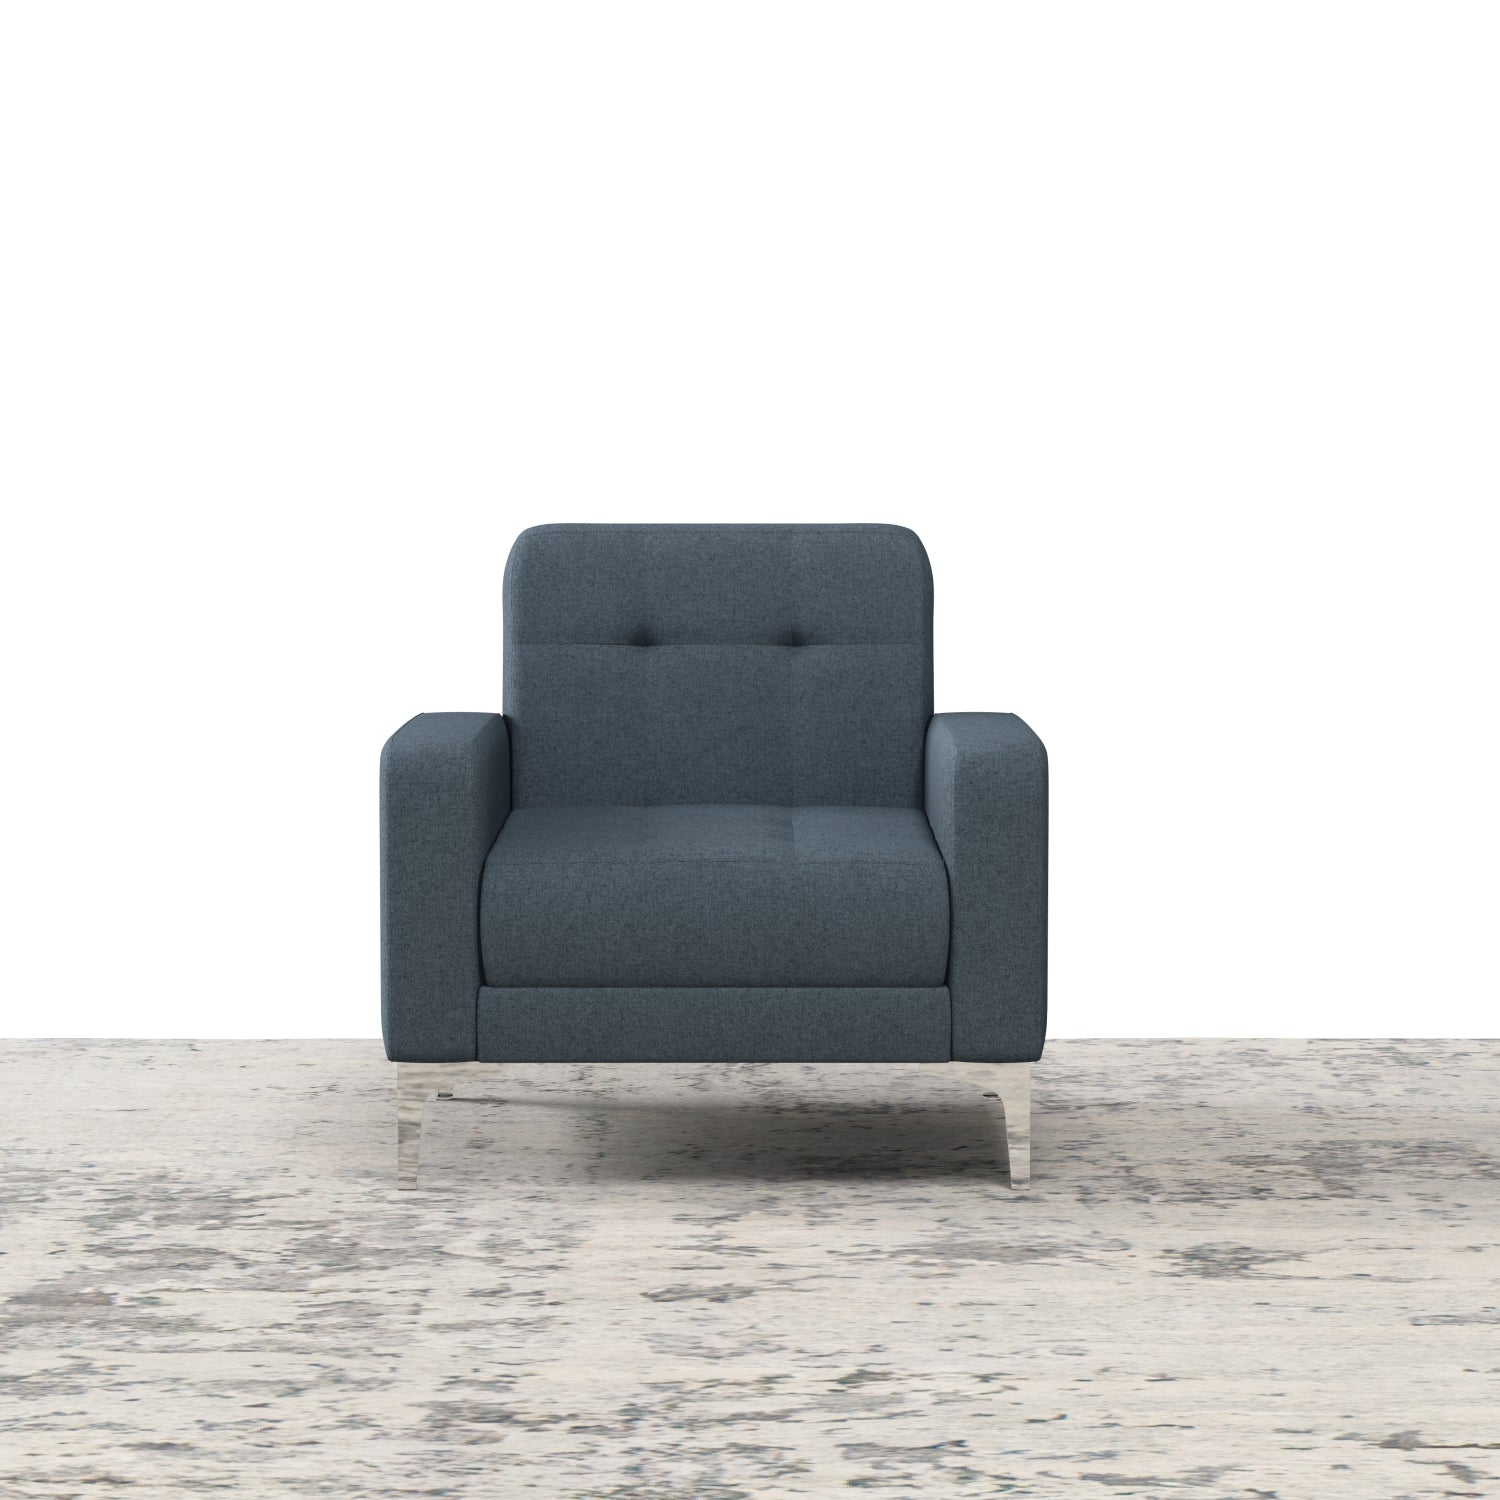 ViscoLogic Bella Forward Fashion Mid-Century Tufted Style Fabric Upholstered Modern Living Room Sofa (Grey)